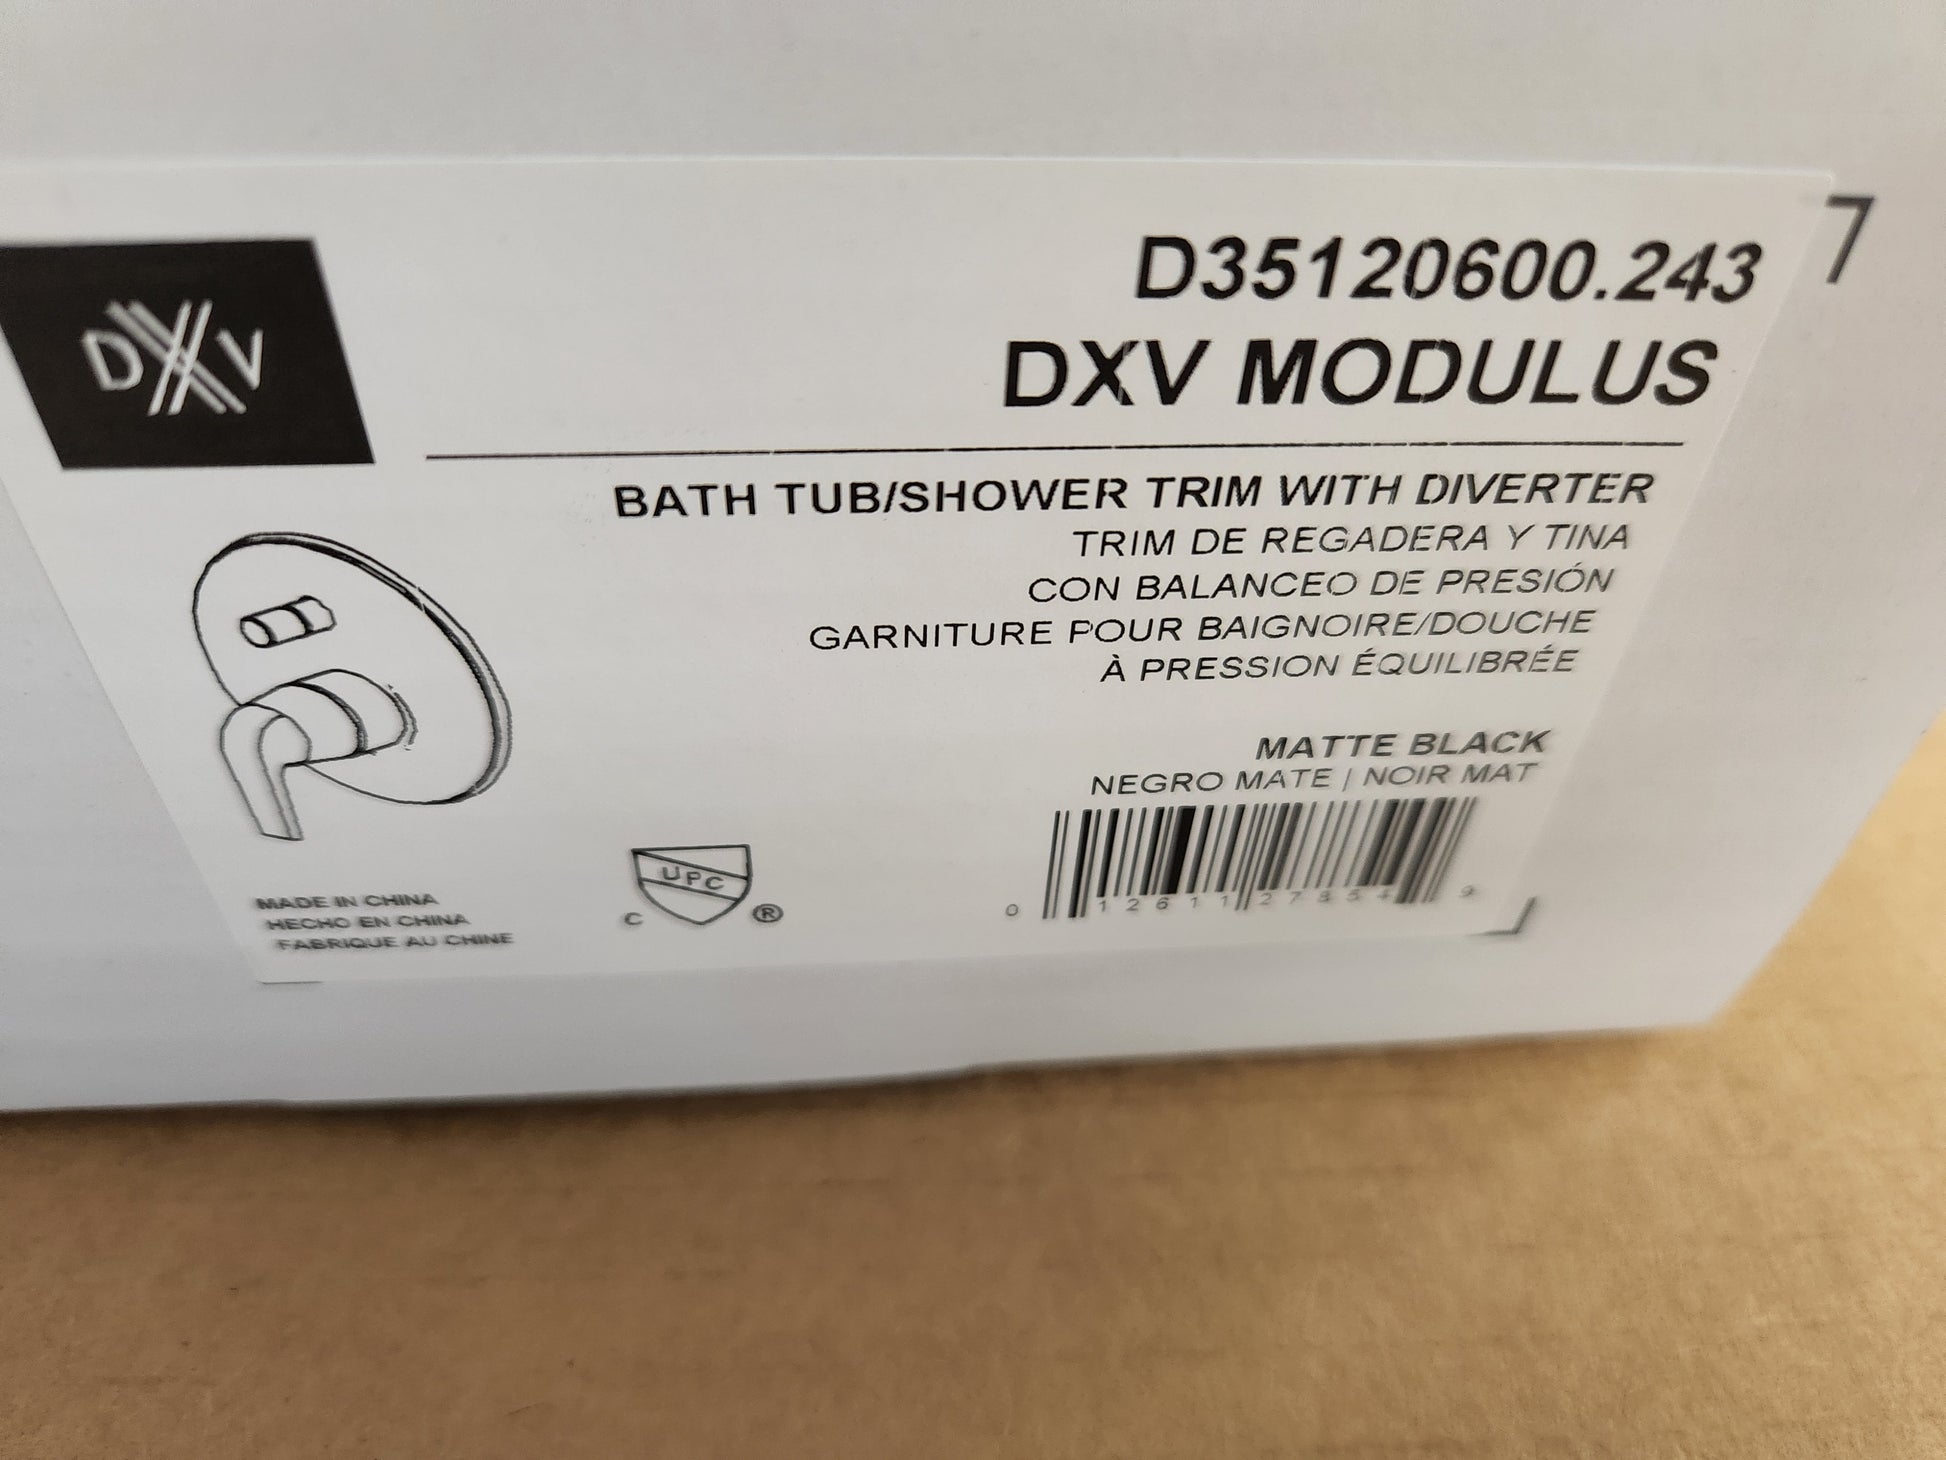 DXV MODULUS MATTE BLACK BATH TUB/SHOWER TRIM WITH DIVERTER